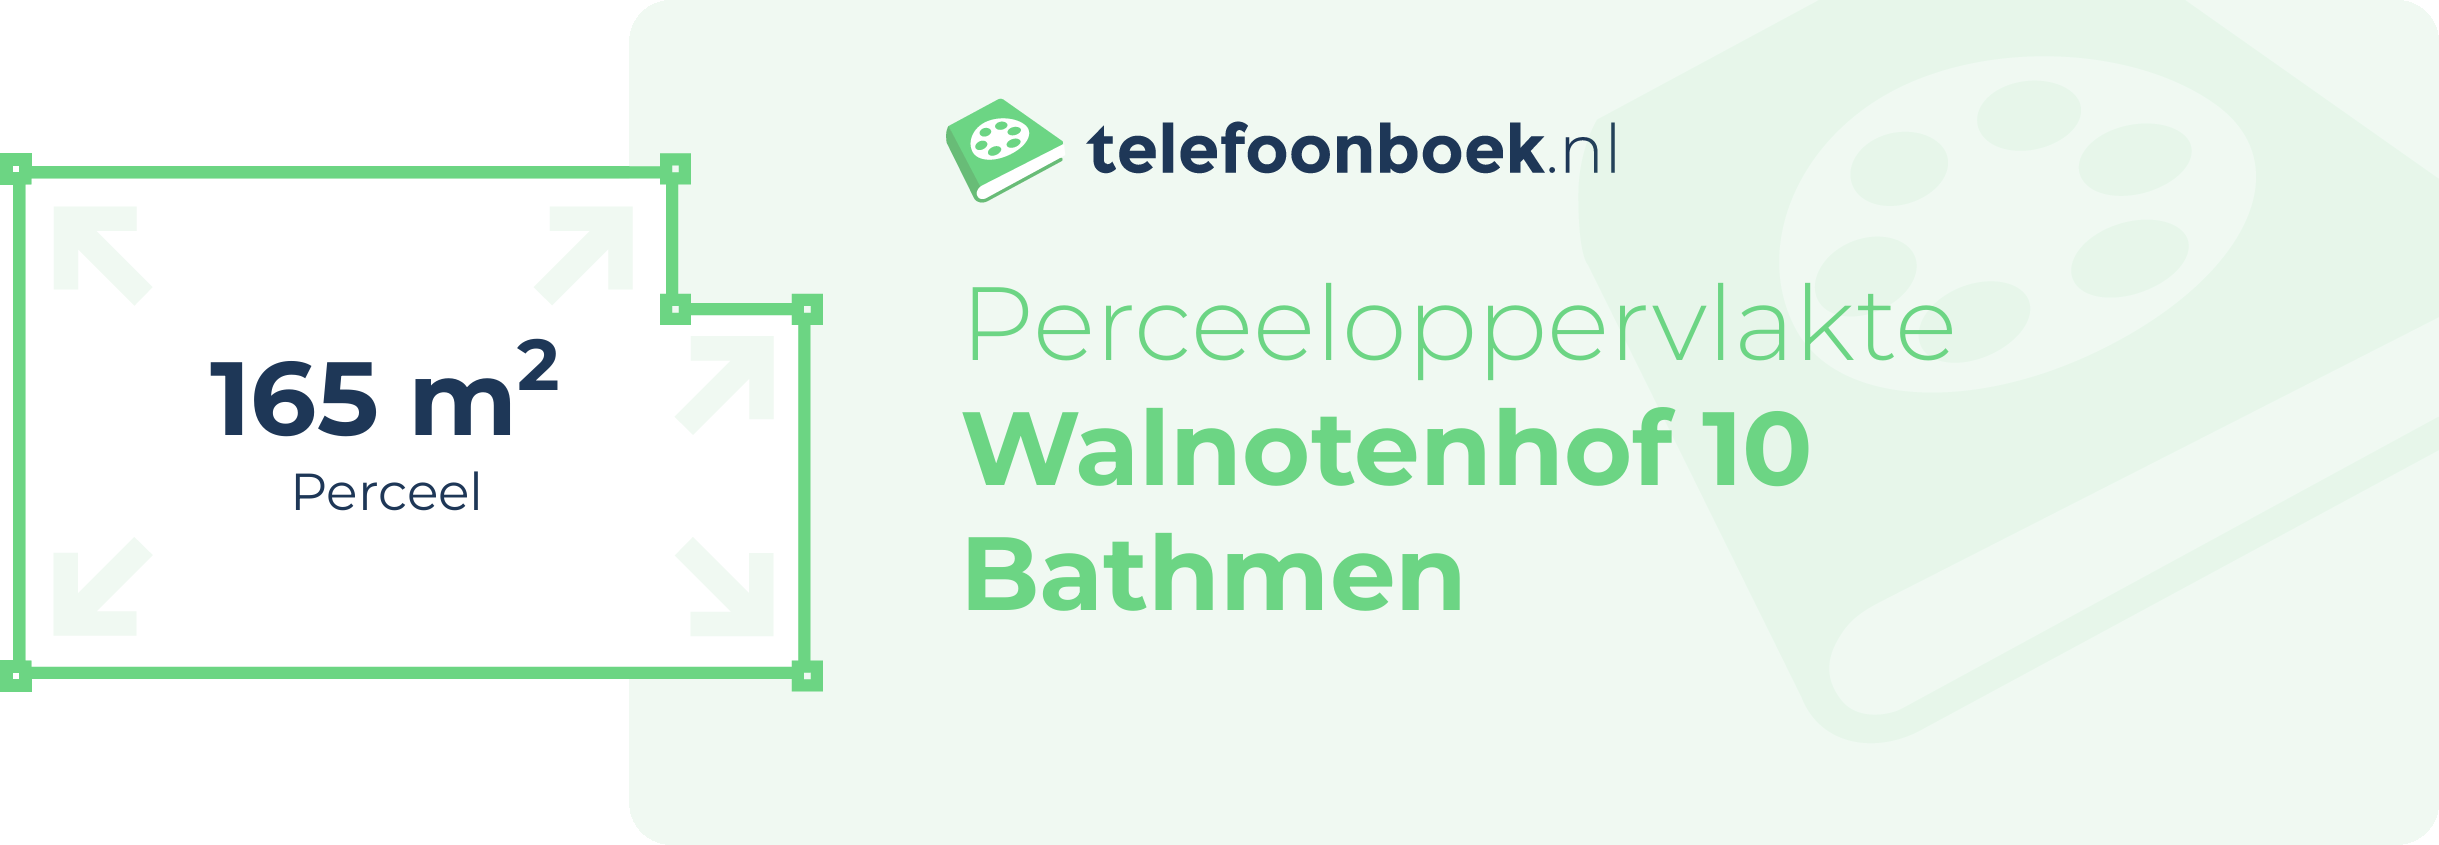 Perceeloppervlakte Walnotenhof 10 Bathmen